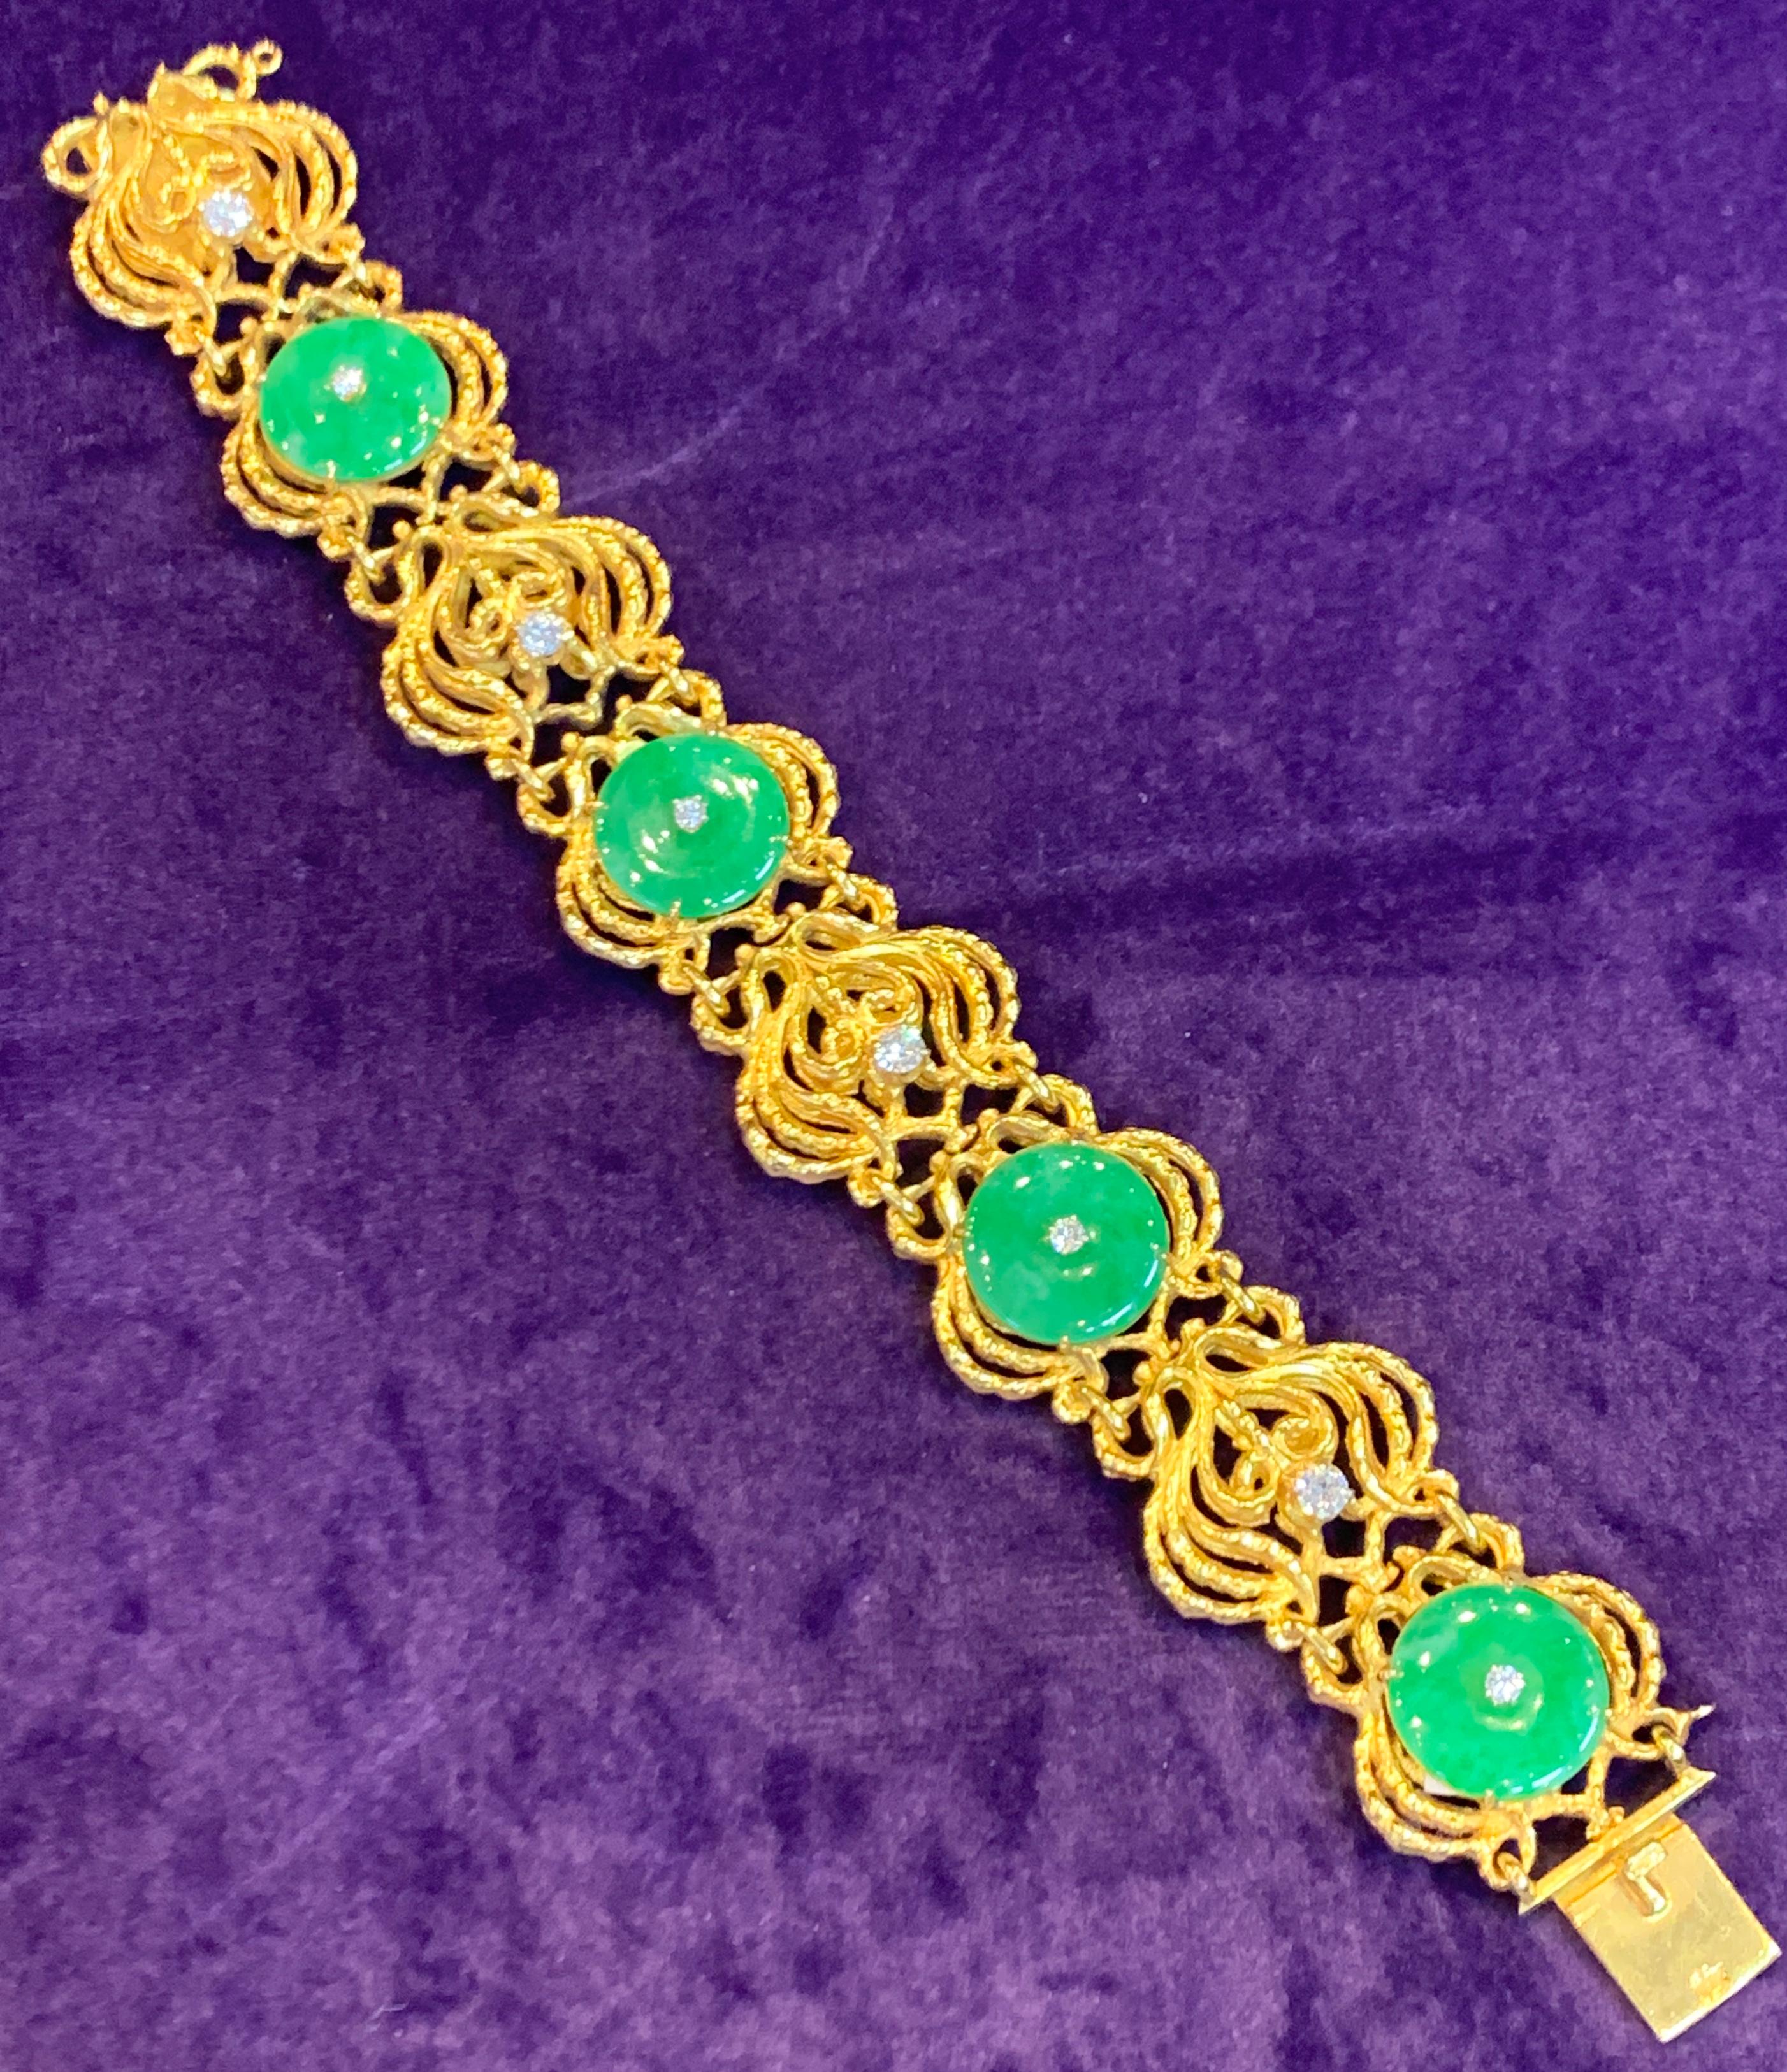 Yellow Gold Natural Jade and Diamond Link Bracelet
18K Yellow Gold
71.3 Grams 
Length: 7.5